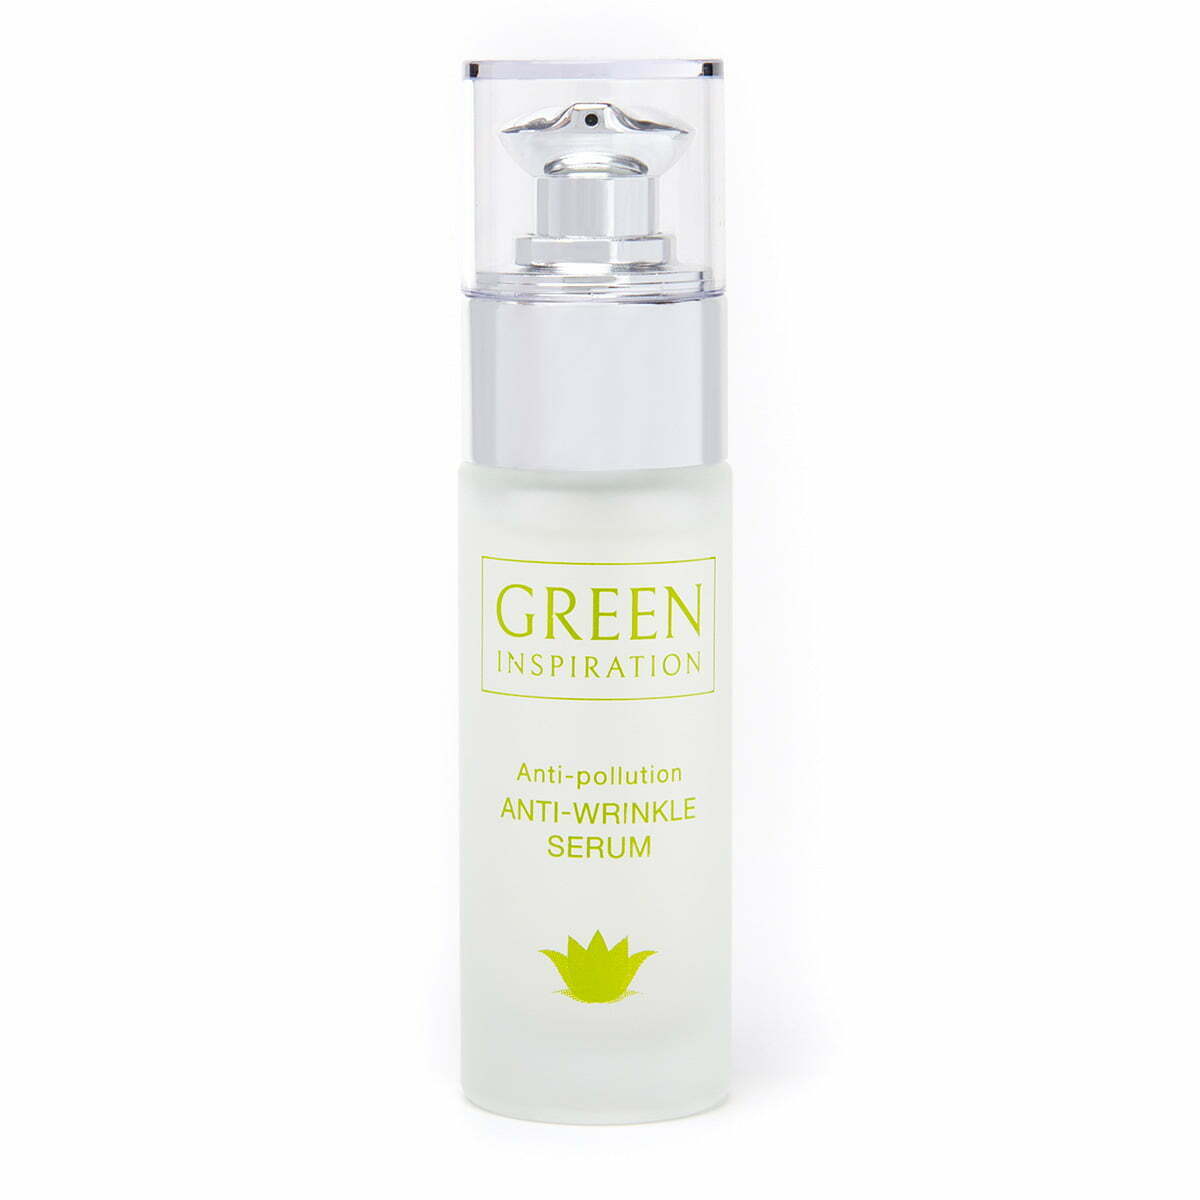 Green Inspiration Anti-pollution I Anti-Wrinkle Serum